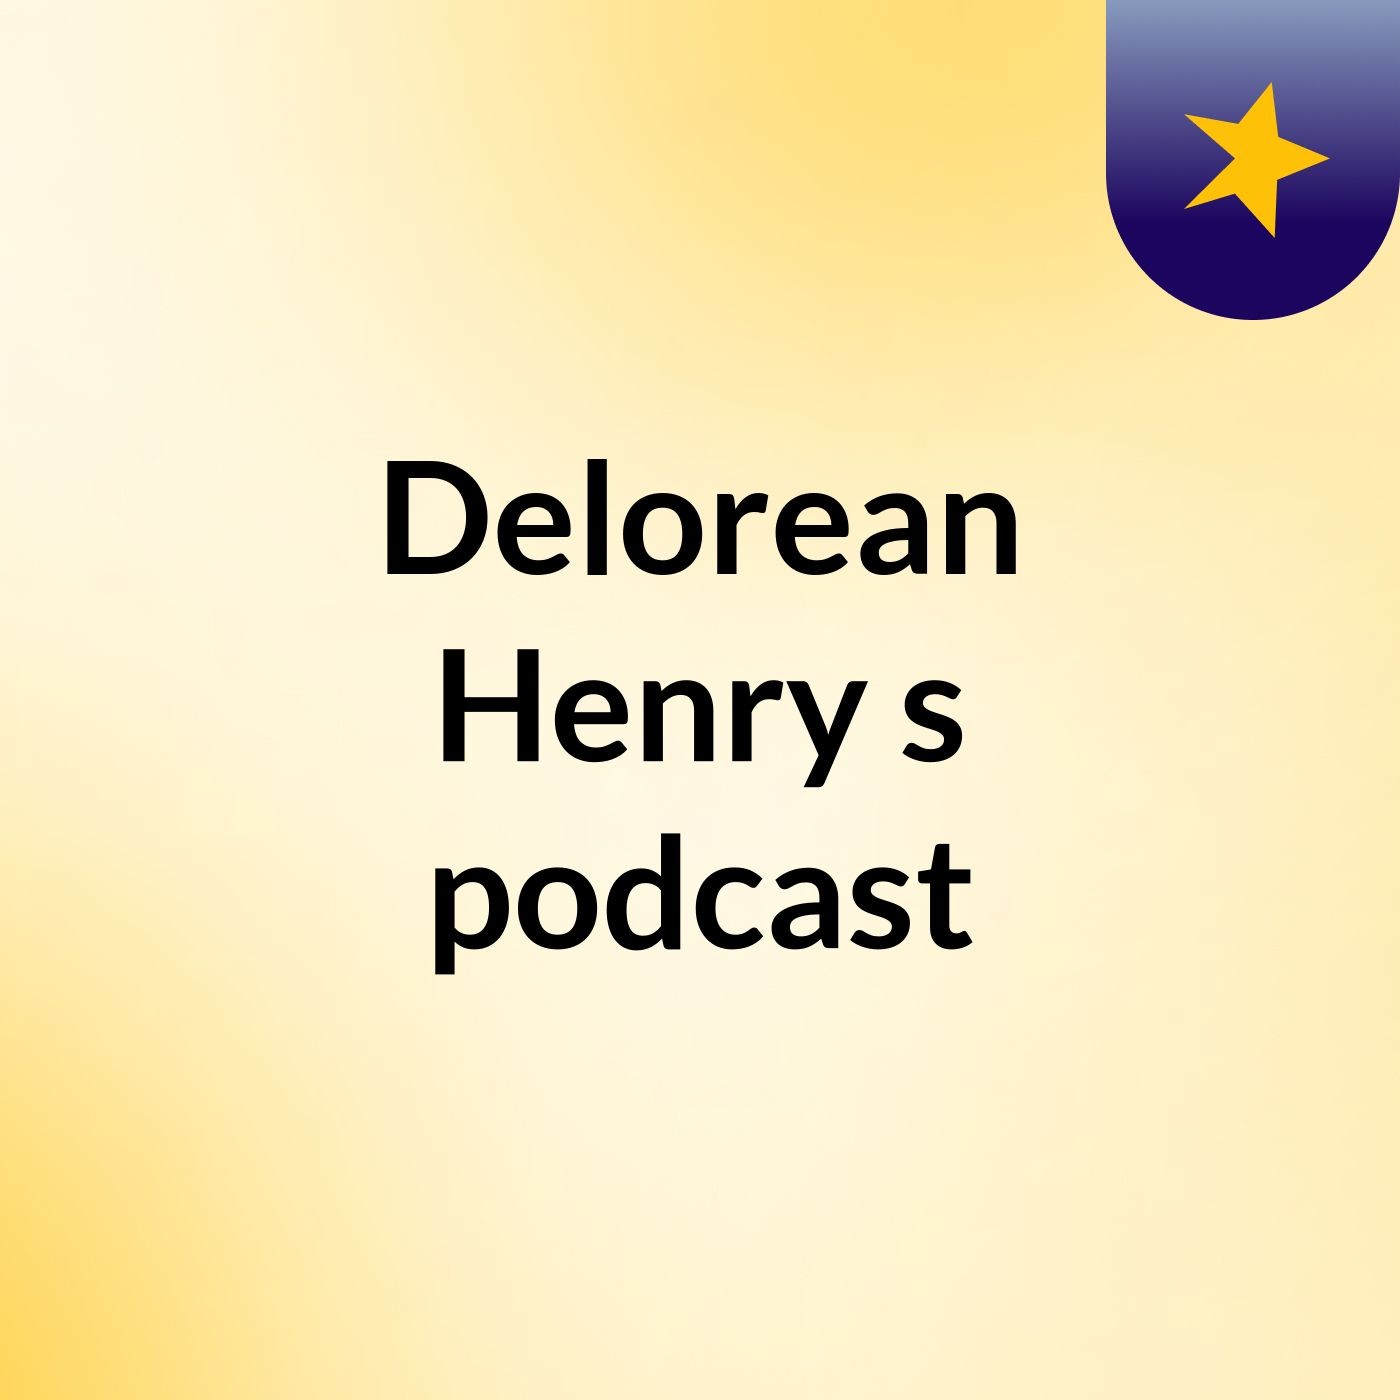 Episode 2 - Delorean Henry's podcast